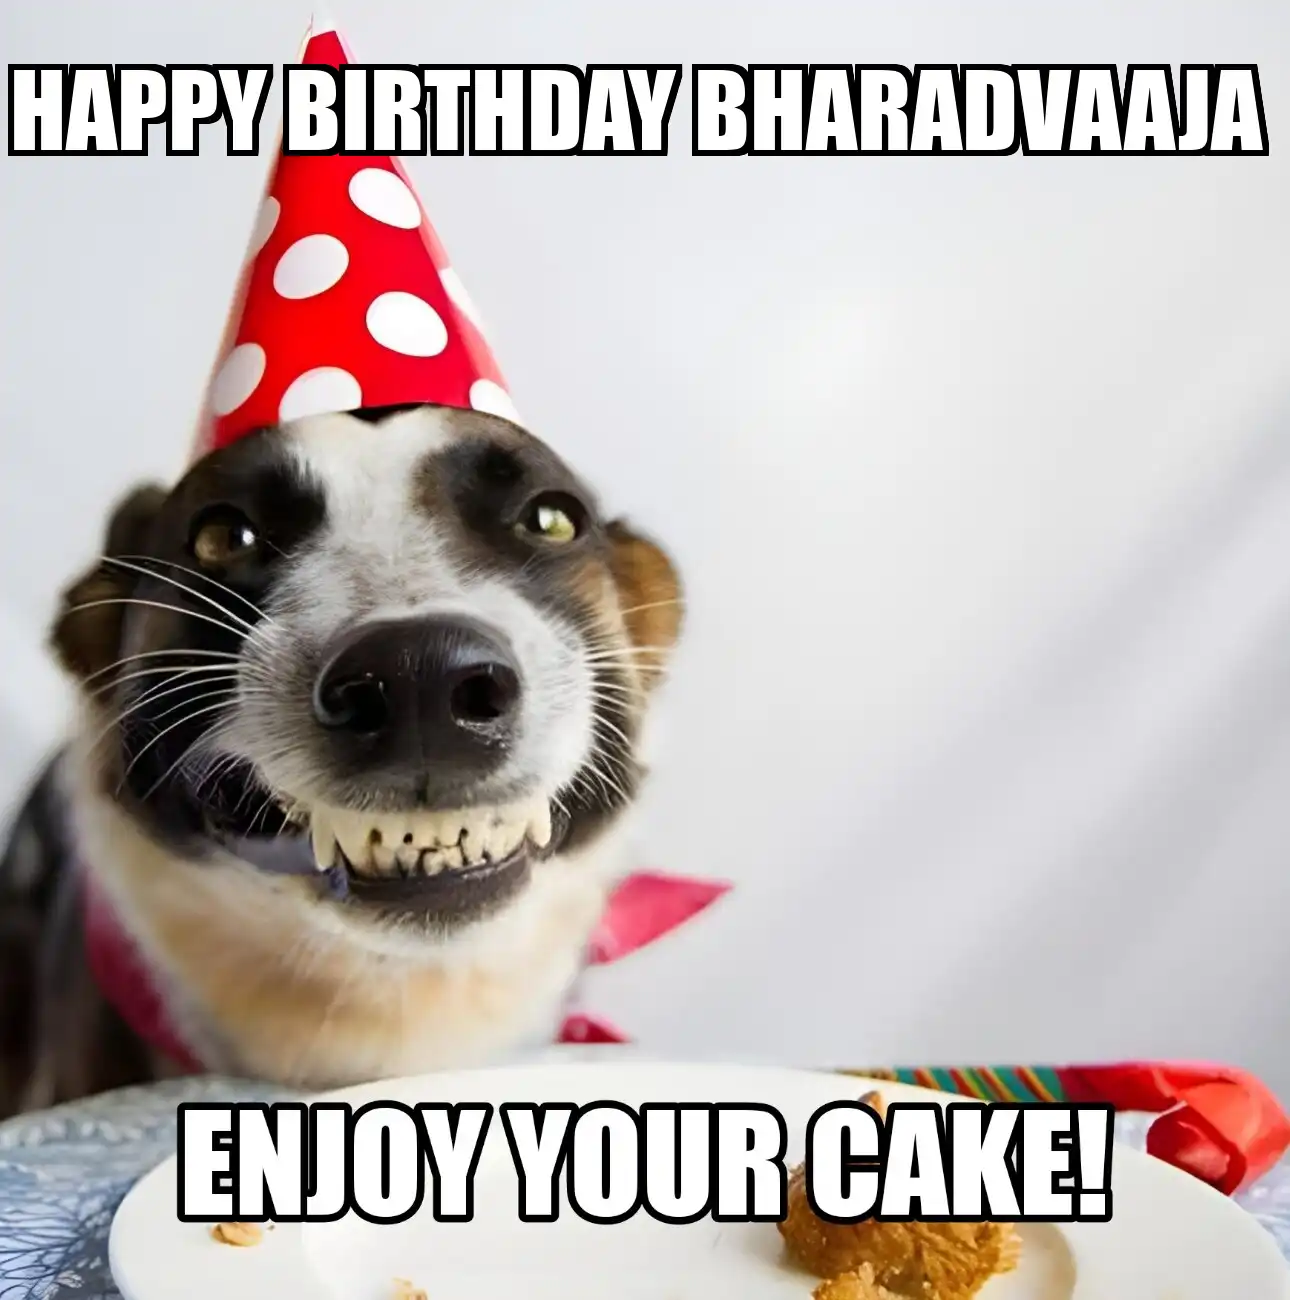 Happy Birthday Bharadvaaja Enjoy Your Cake Dog Meme